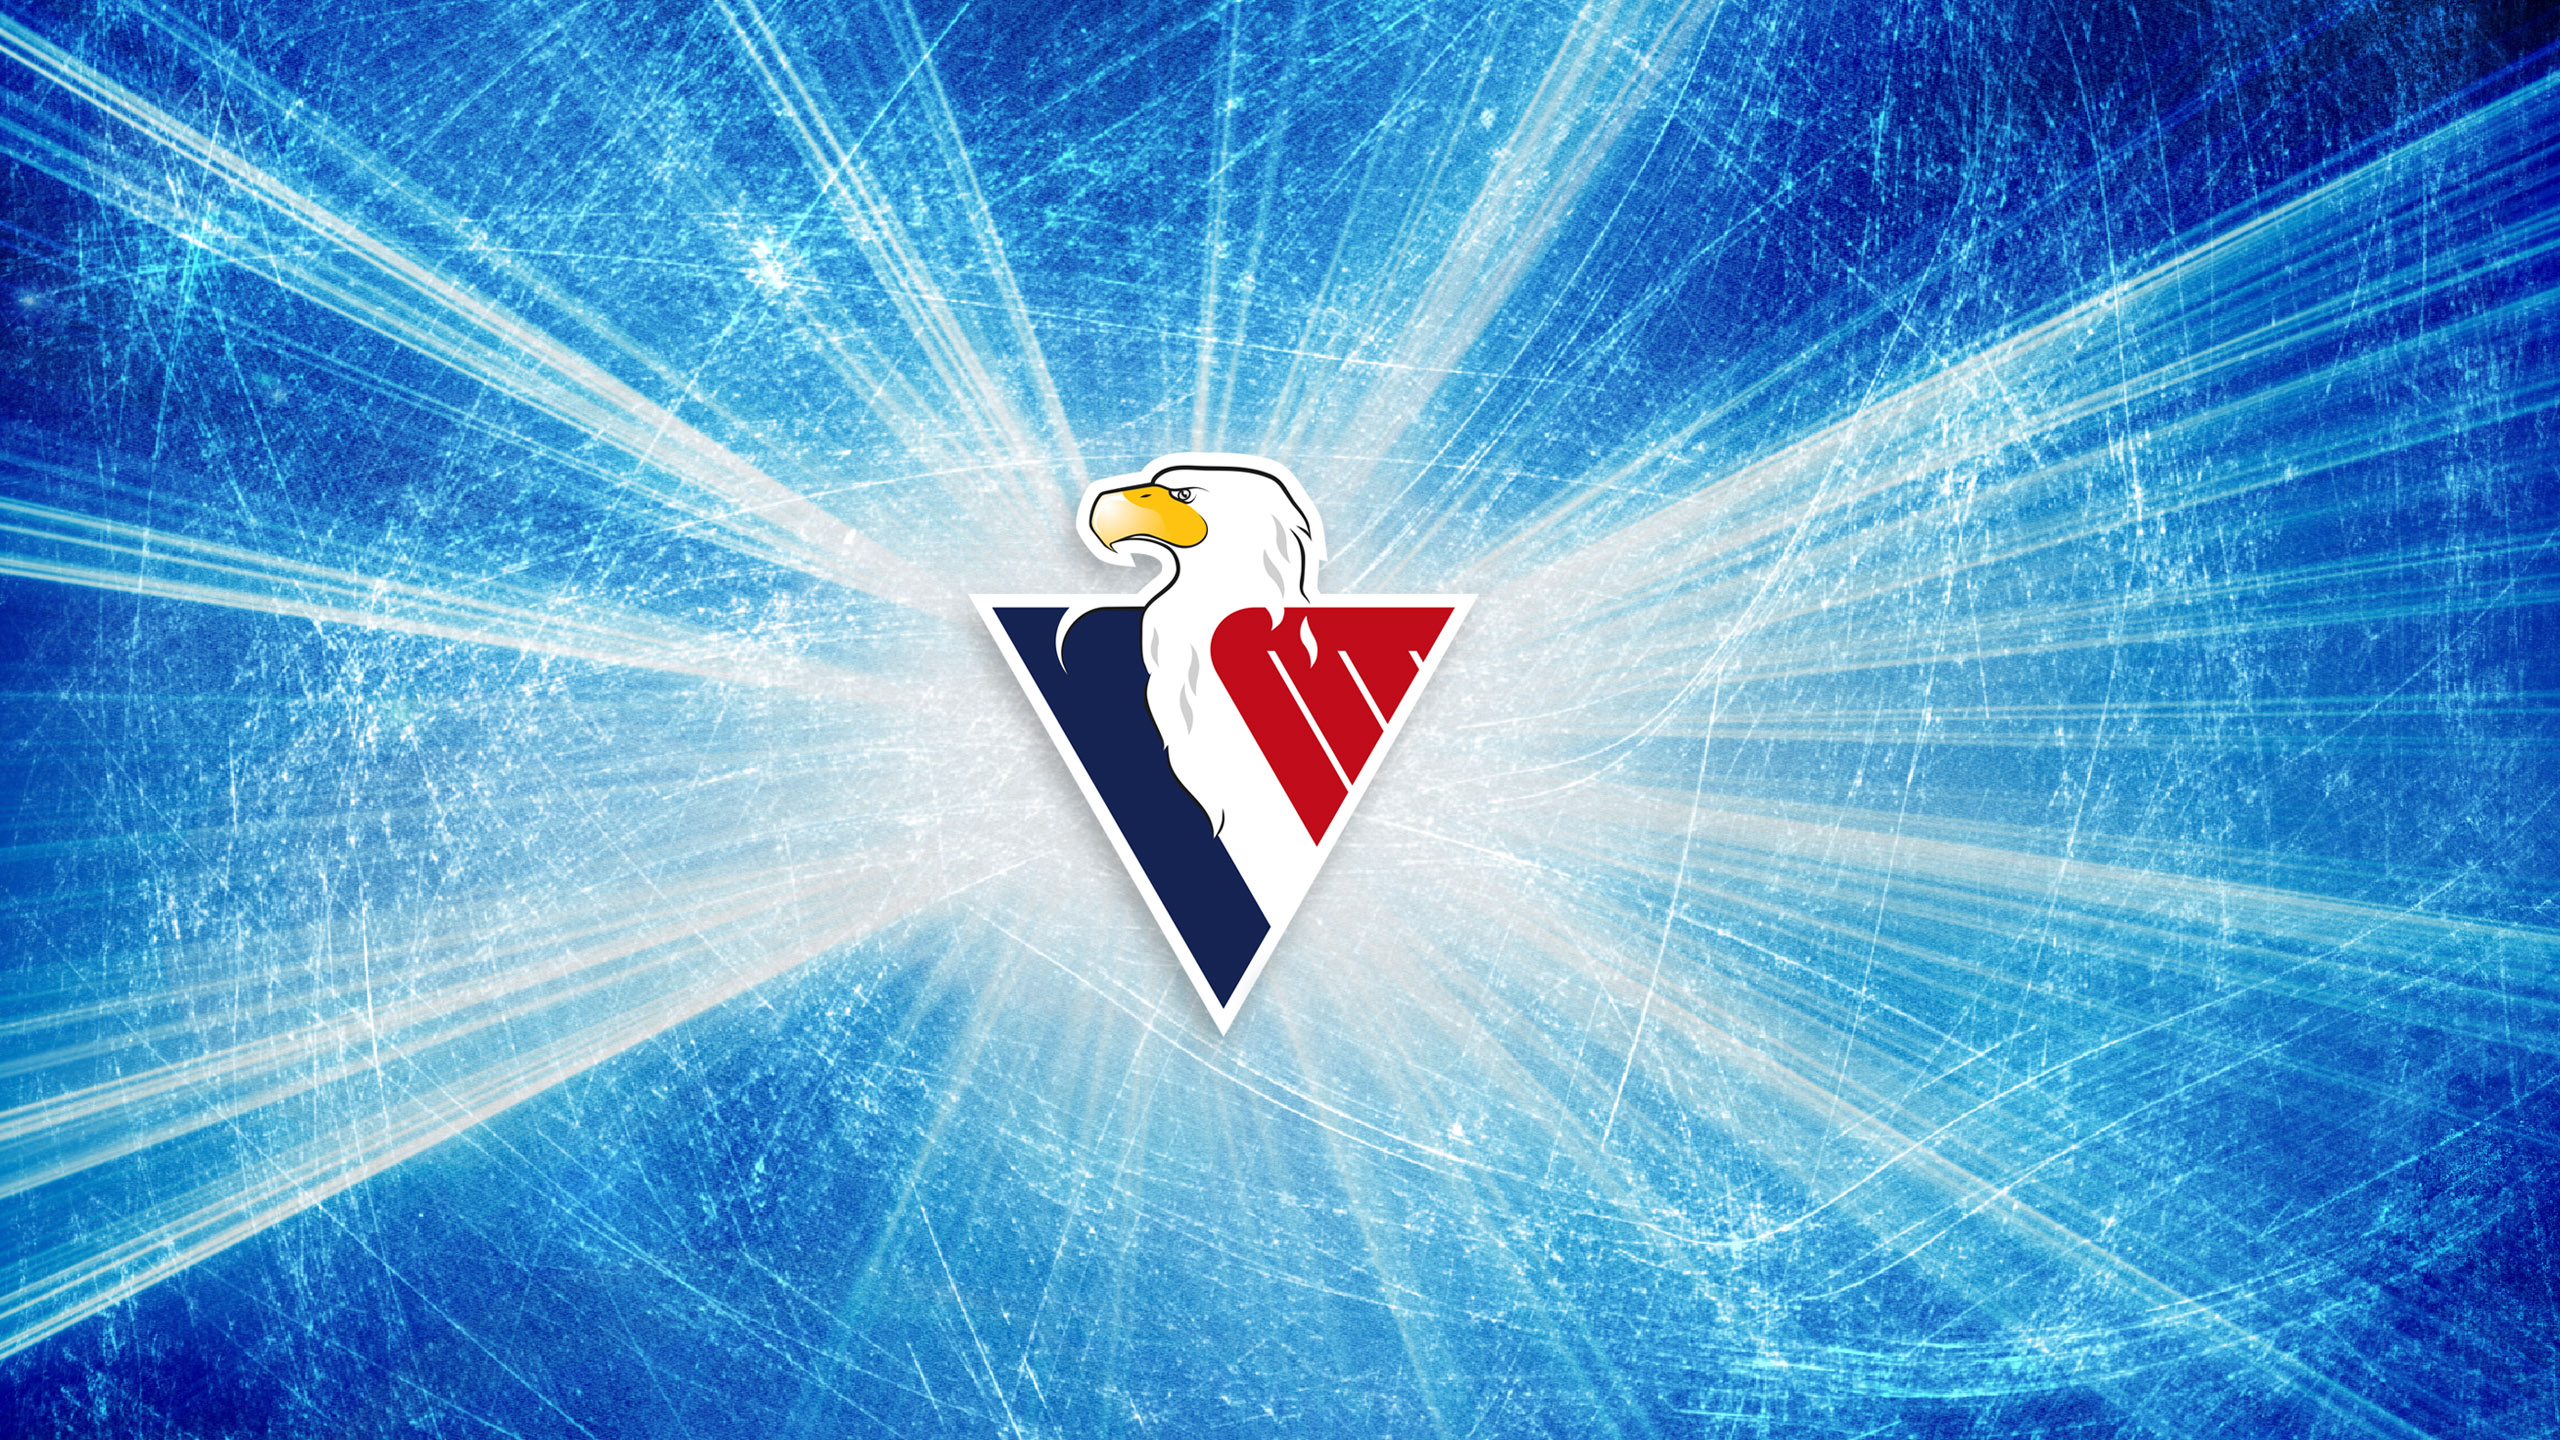 animals, Birds, Eagle, Digital art, Ice hockey, Slovan Bratislava, Logo, Ice, Triangle Wallpaper